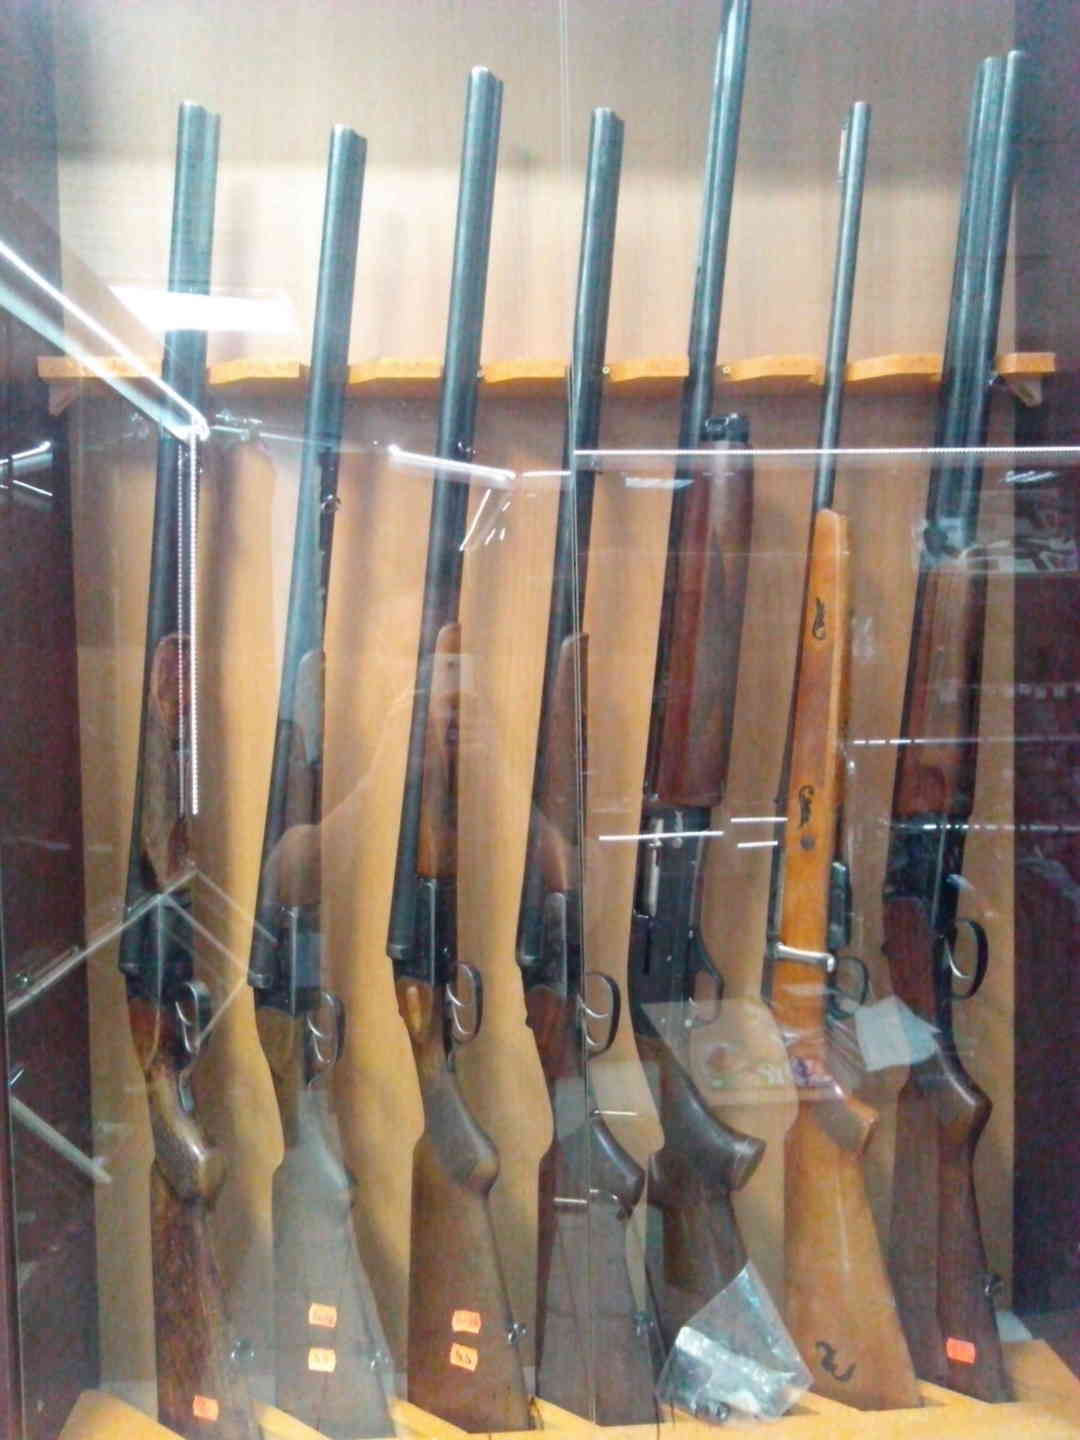 Продажа оружия комиссионный магазин. Комиссионный магазин охотничьего оружия.